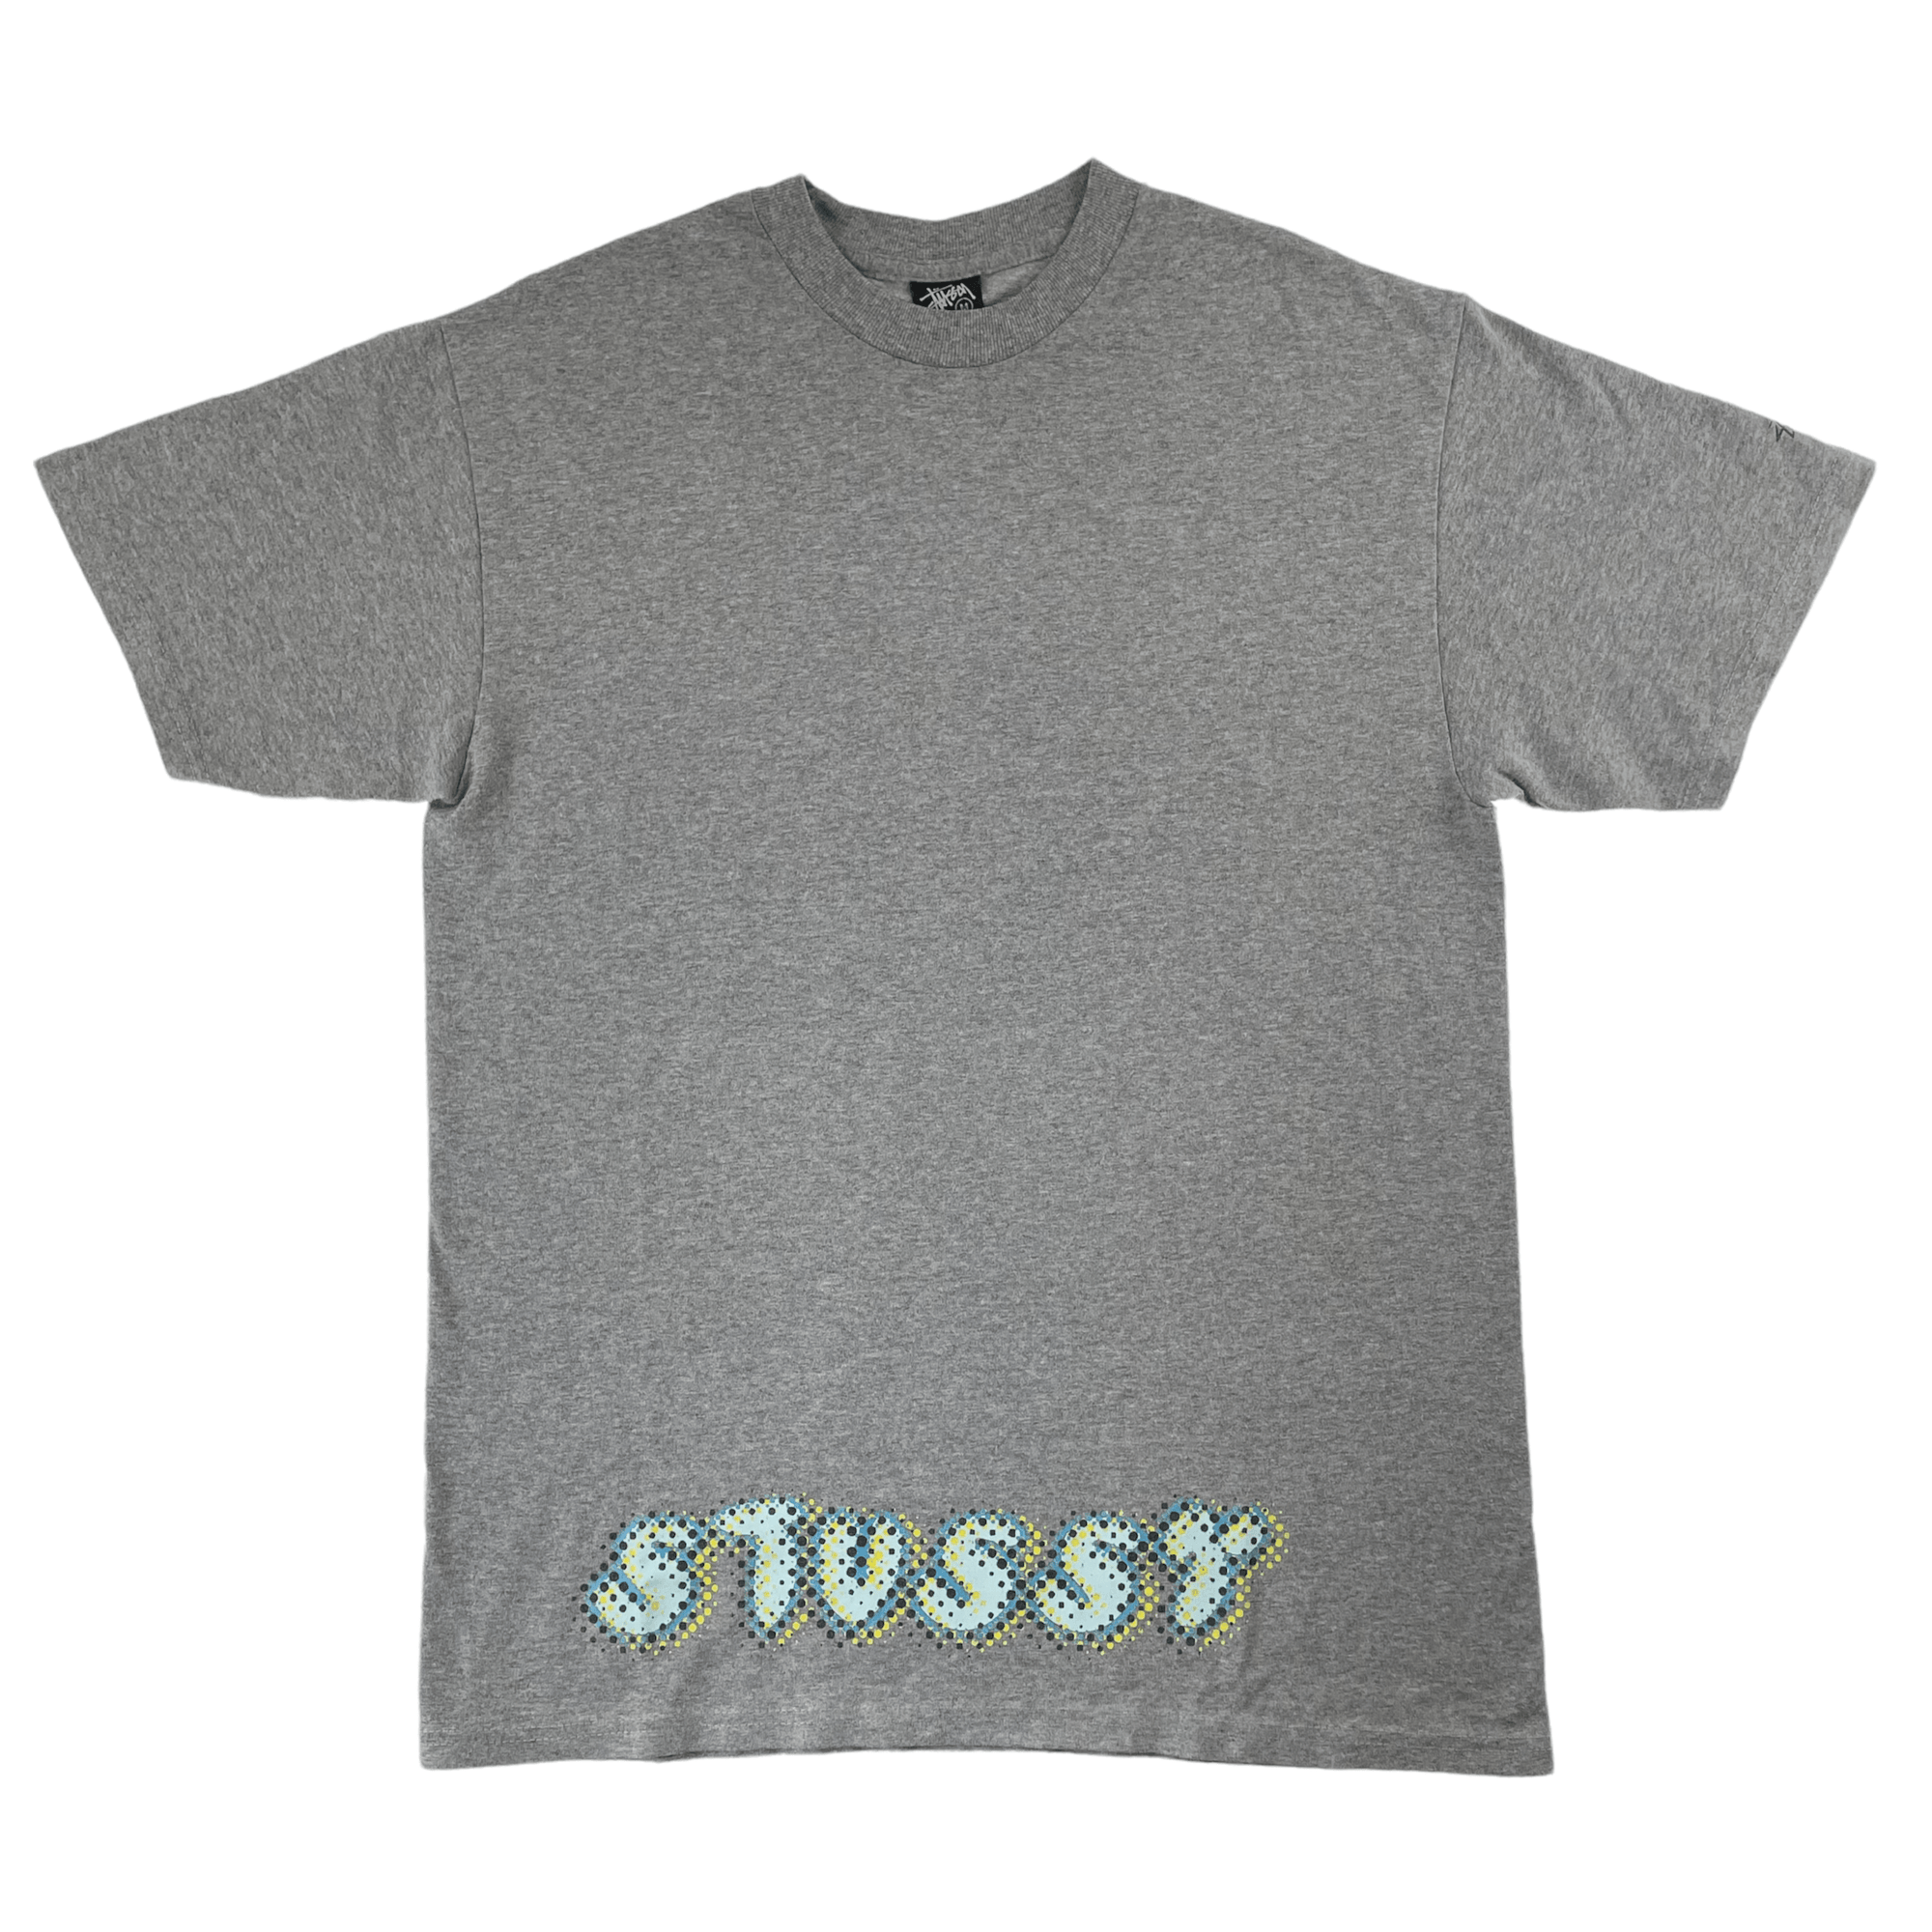 New Vintage Stussy World Tribe Tee T-Shirt Tour Grey Gray Size Medium M